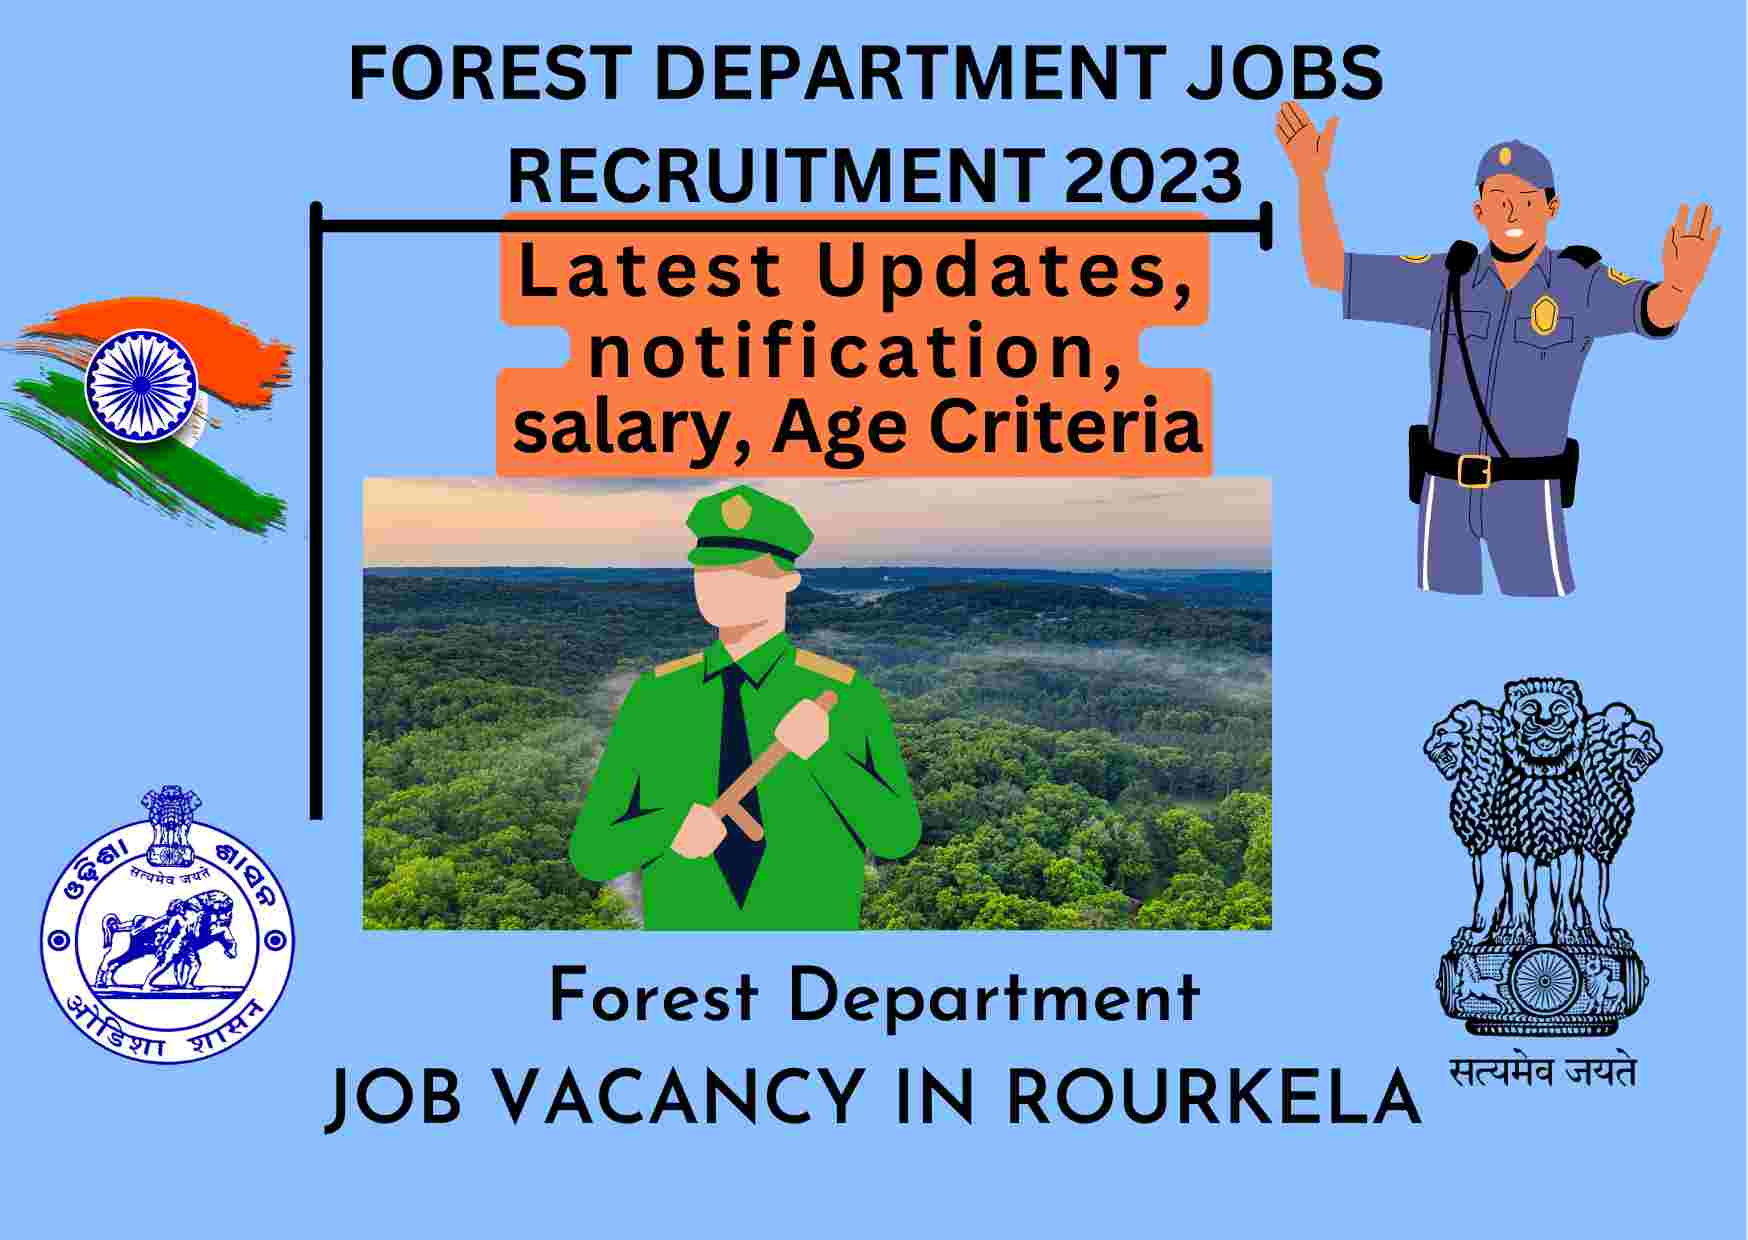 Forest Department Jobs in Rourkela 2023